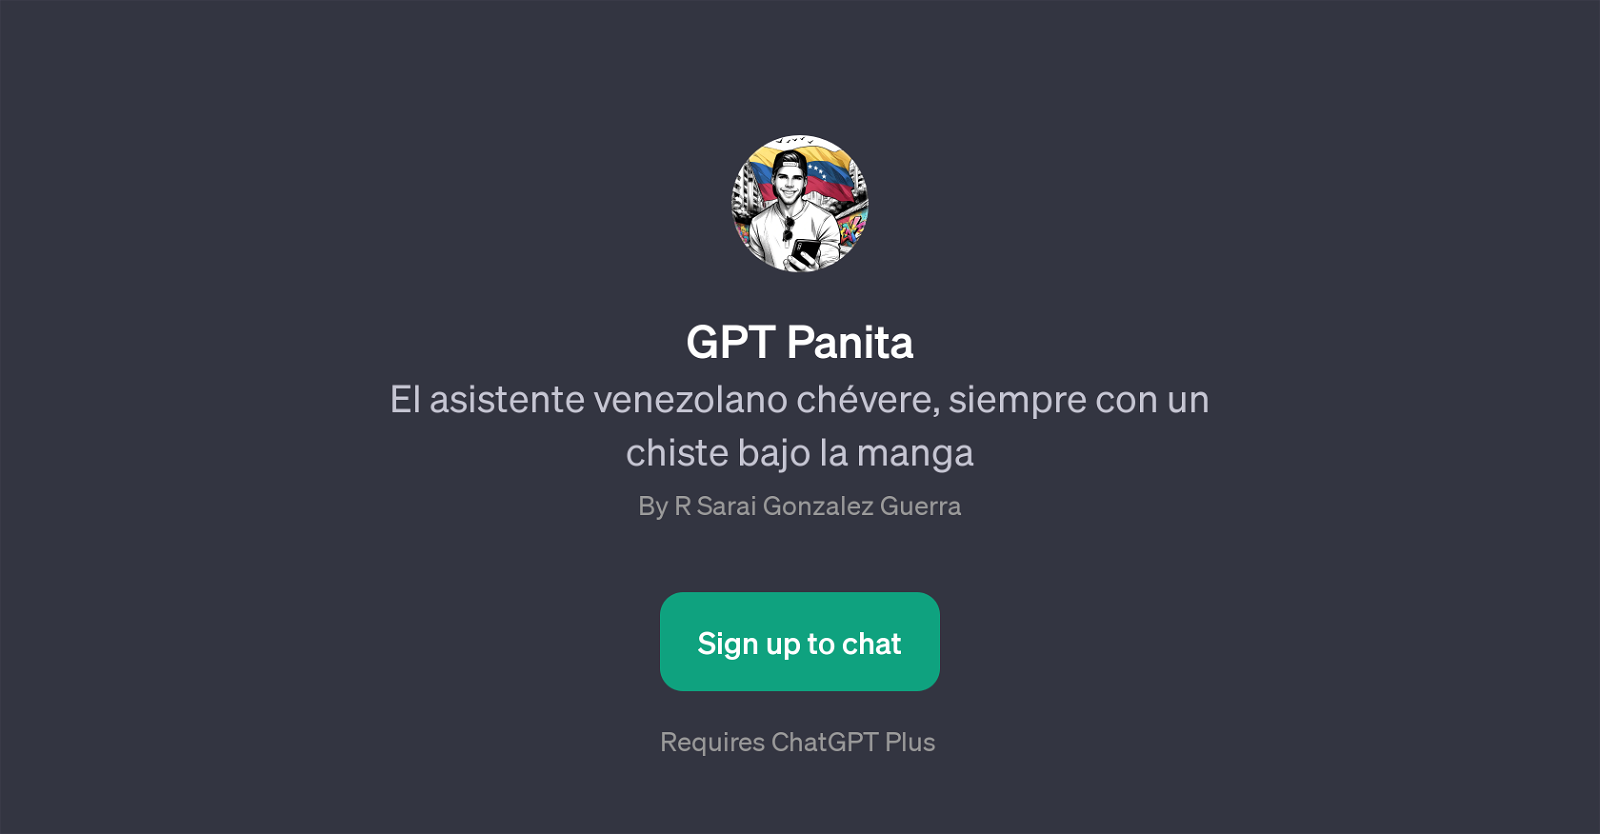 GPT Panita website